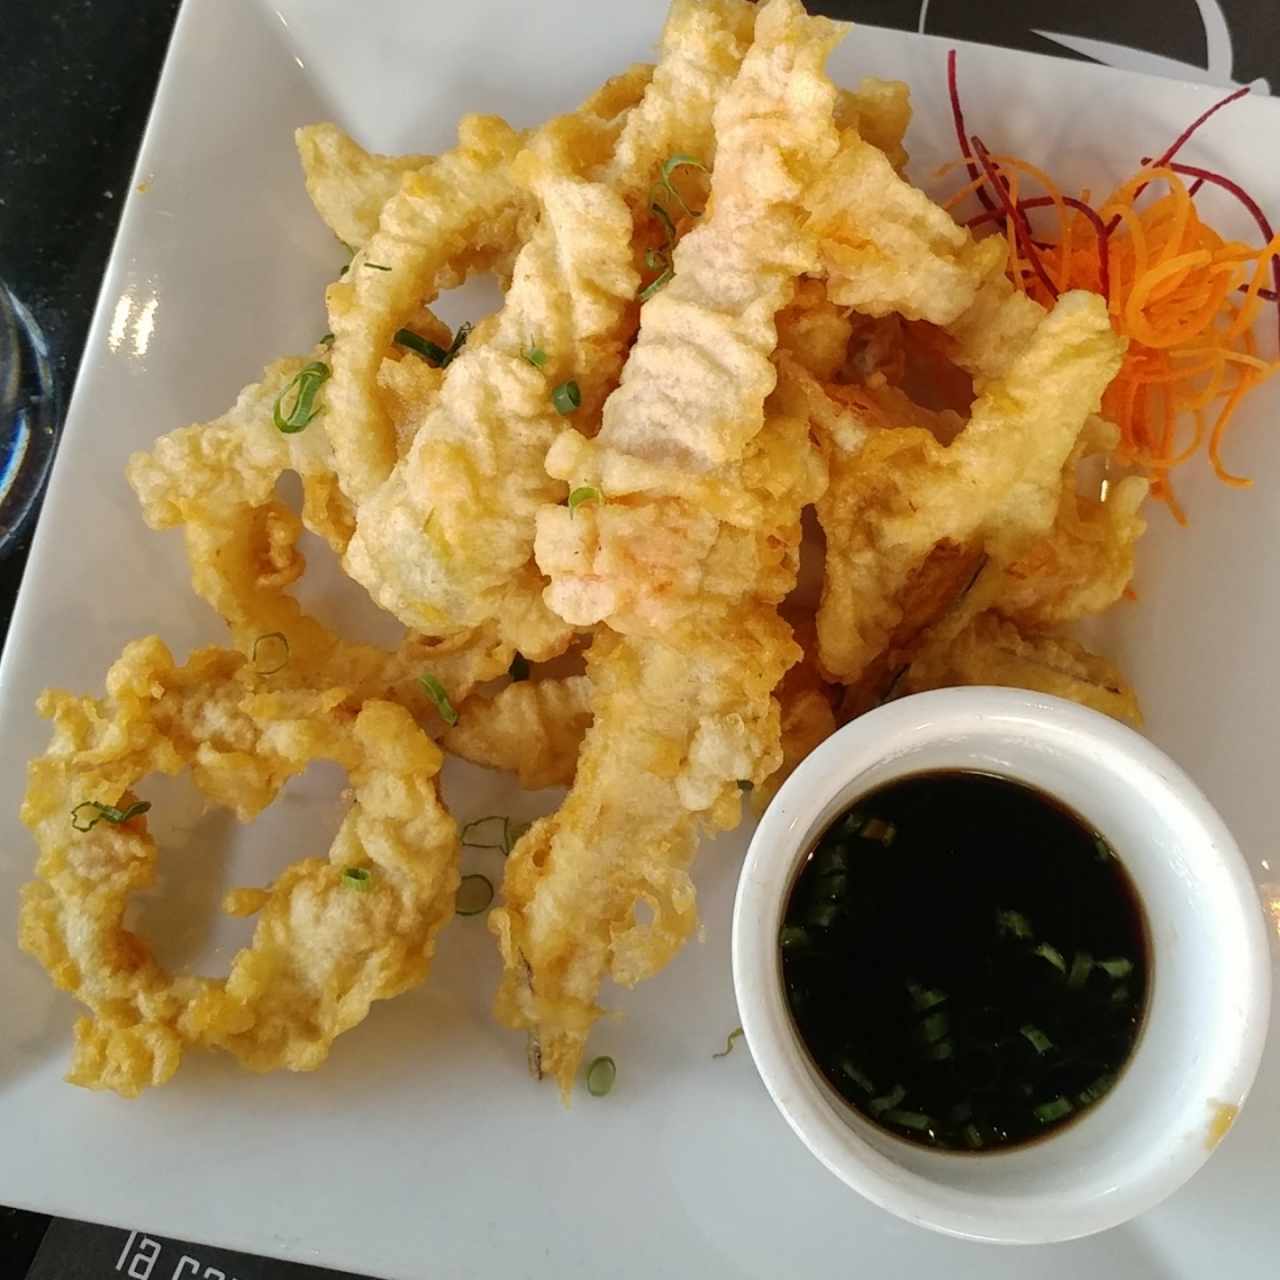  Vegetales tempura